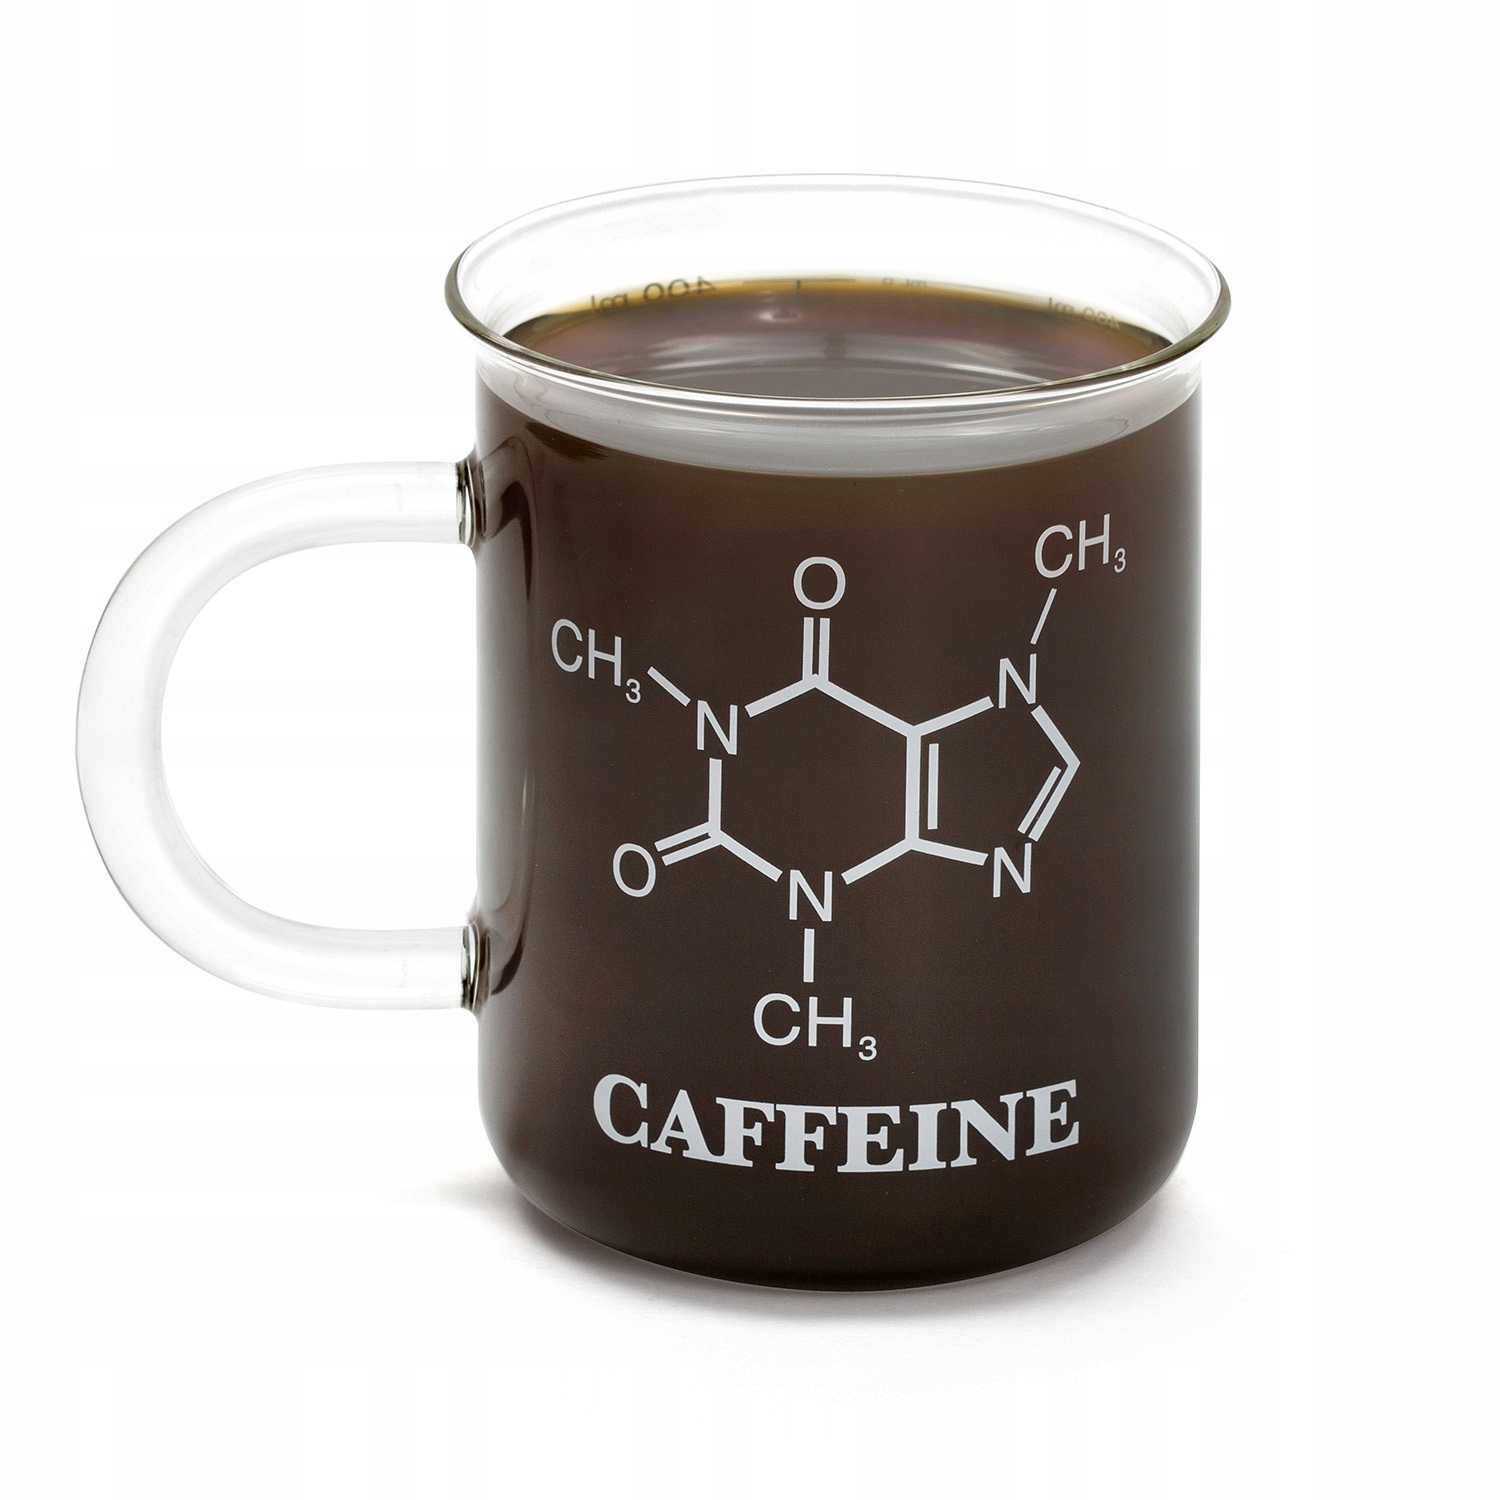 Сироп кофеина. Кружка для химика. Кружки с химическими формулами. Кружка кофеин. Кружка с надписью кофеин.